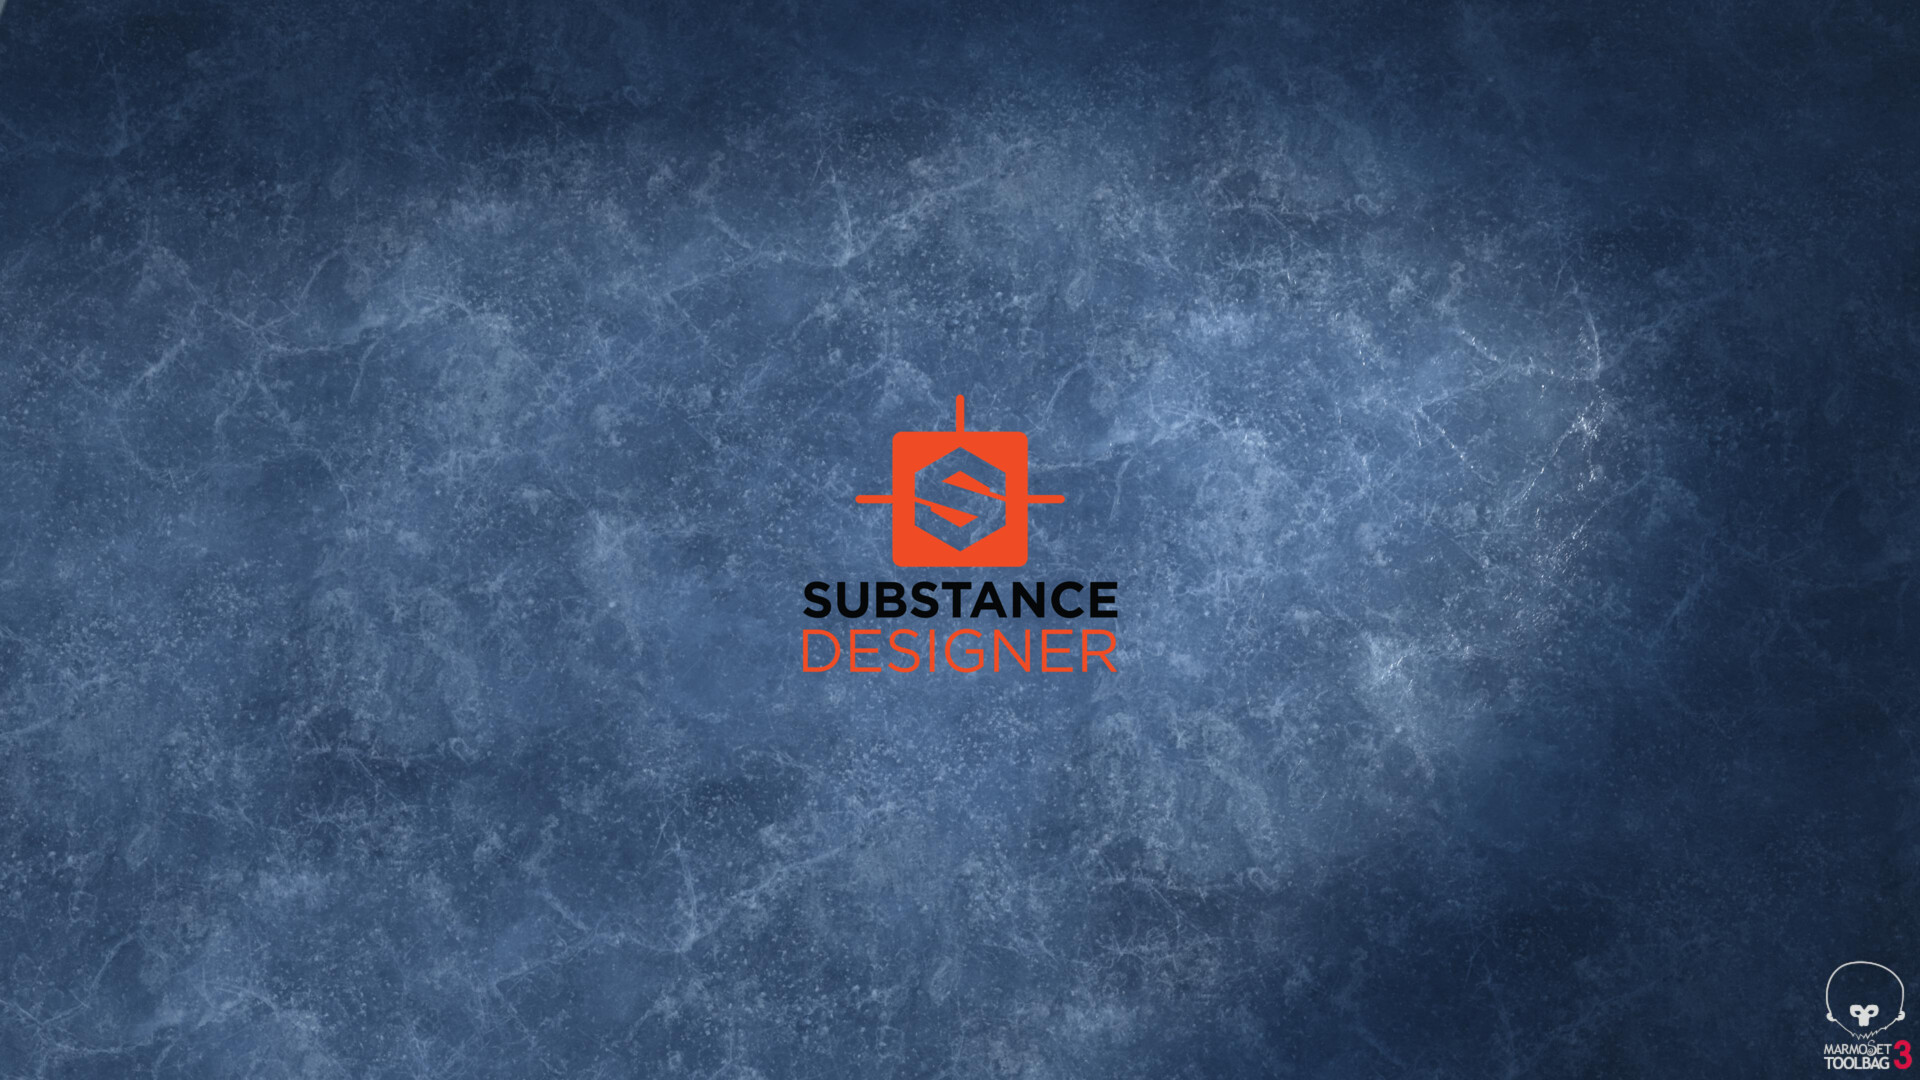 ArtStation - The ice zone-substance designer